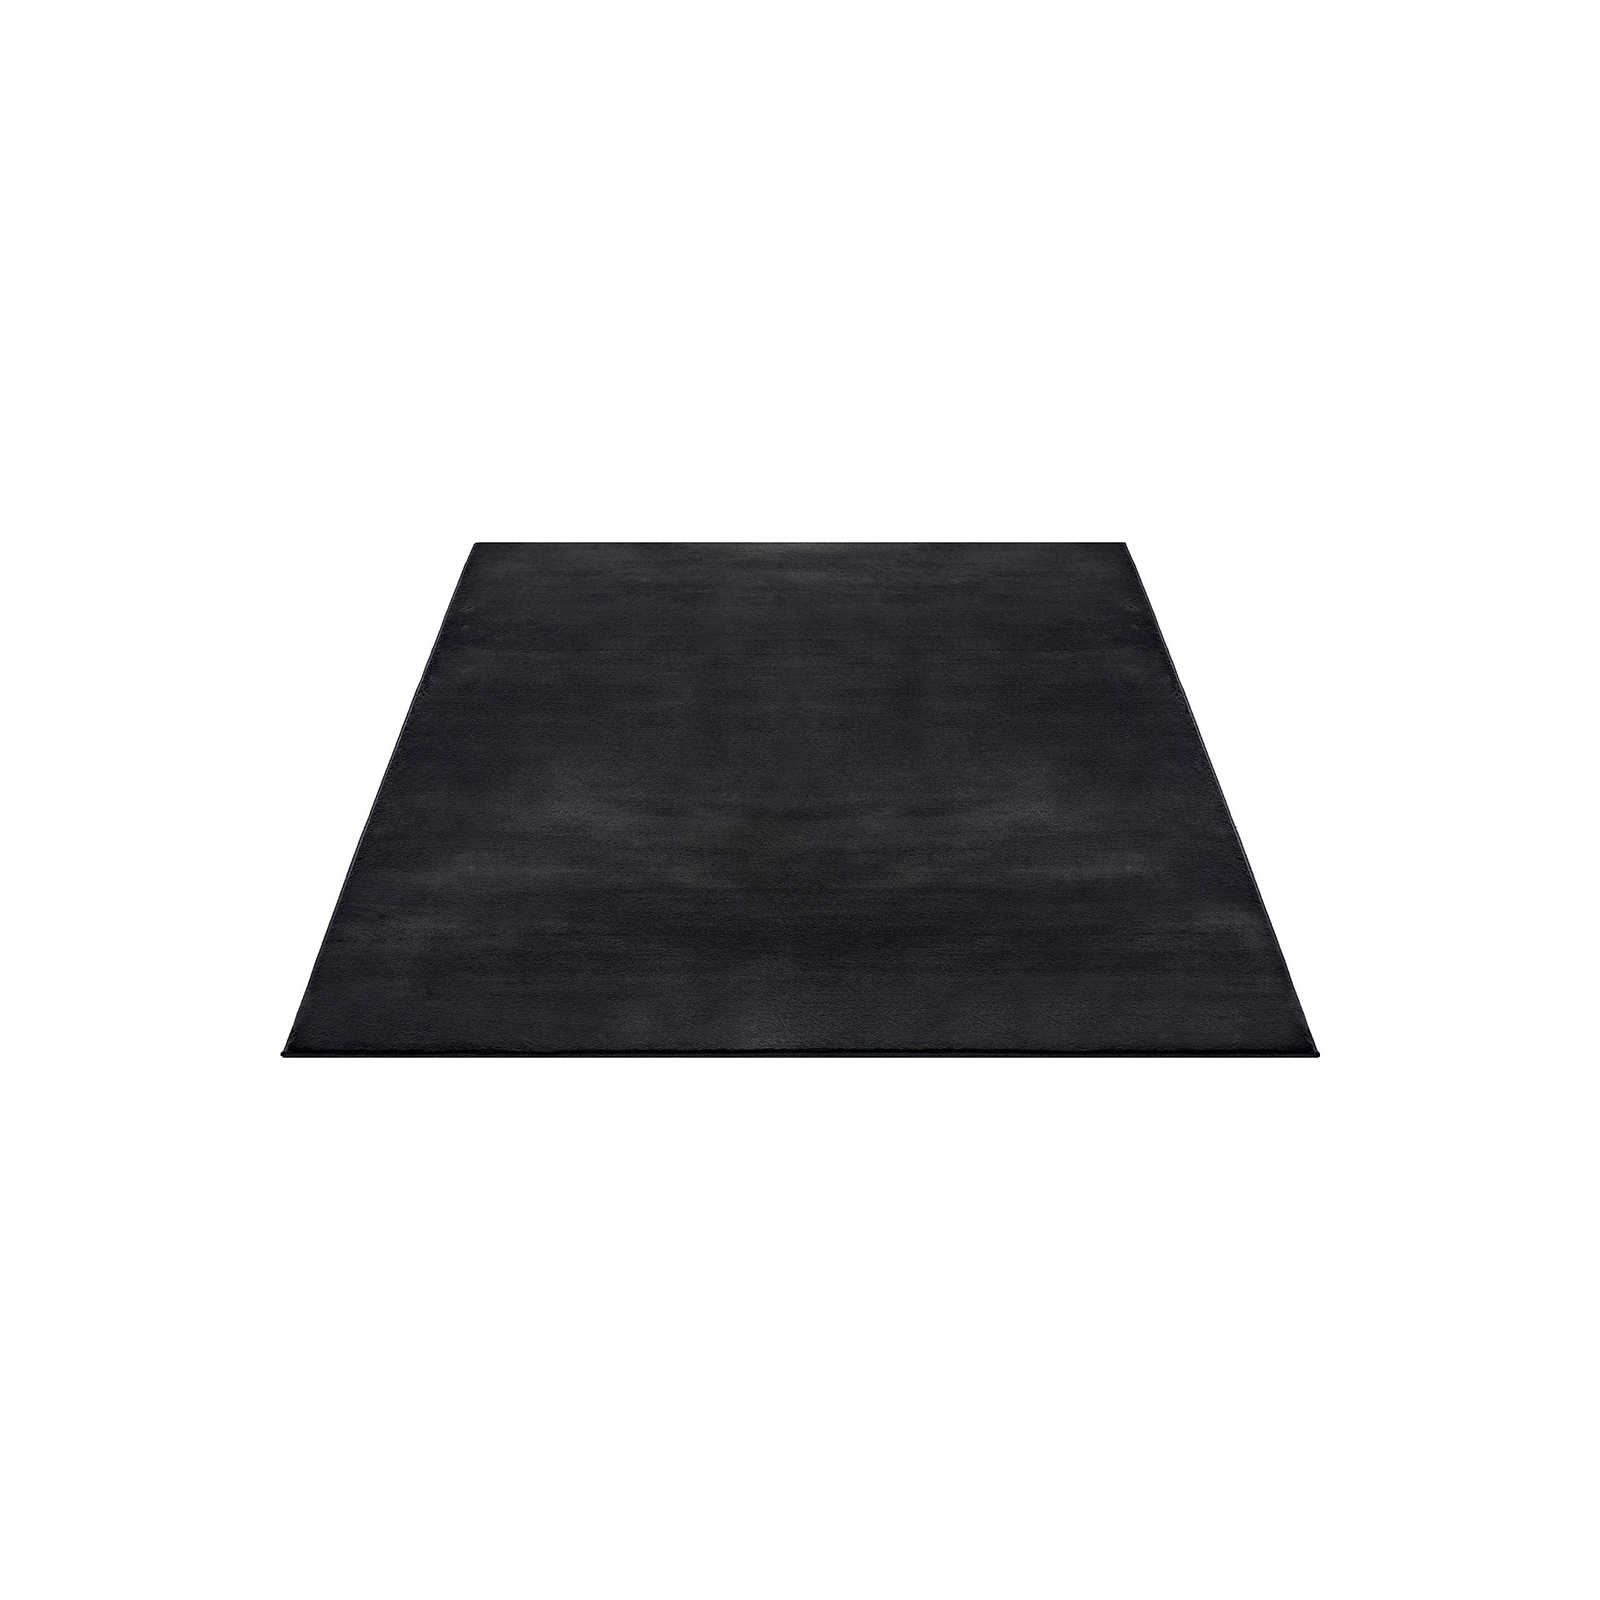 Knuffelzacht hoogpolig tapijt in zwart - 220 x 160 cm
